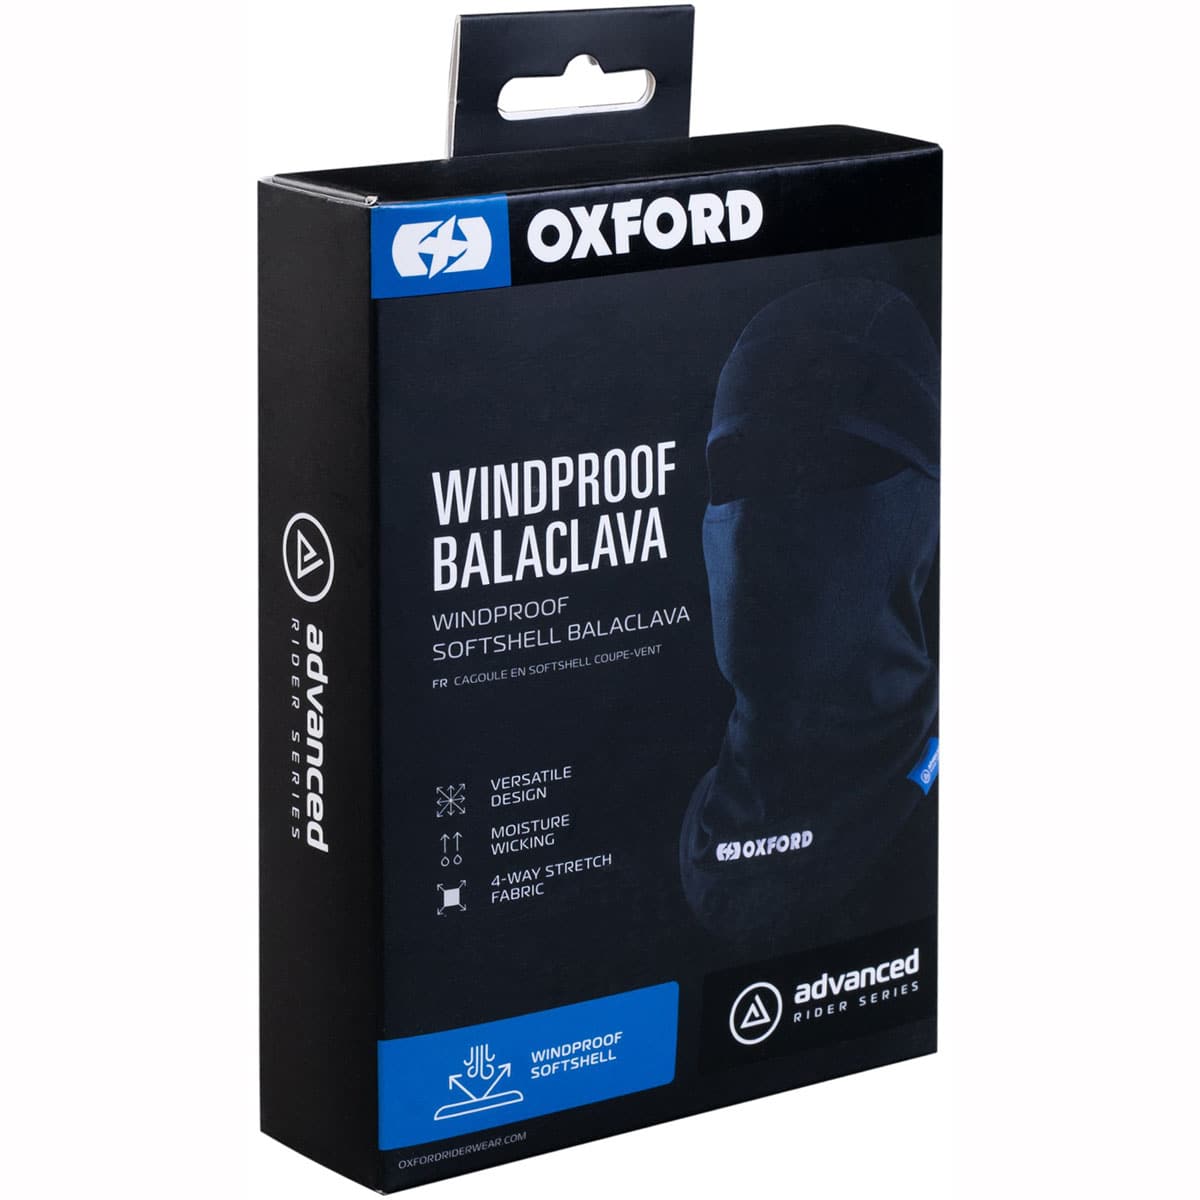 Oxford Advanced Windproof Balaclava: A windproof motorcycle baselayer